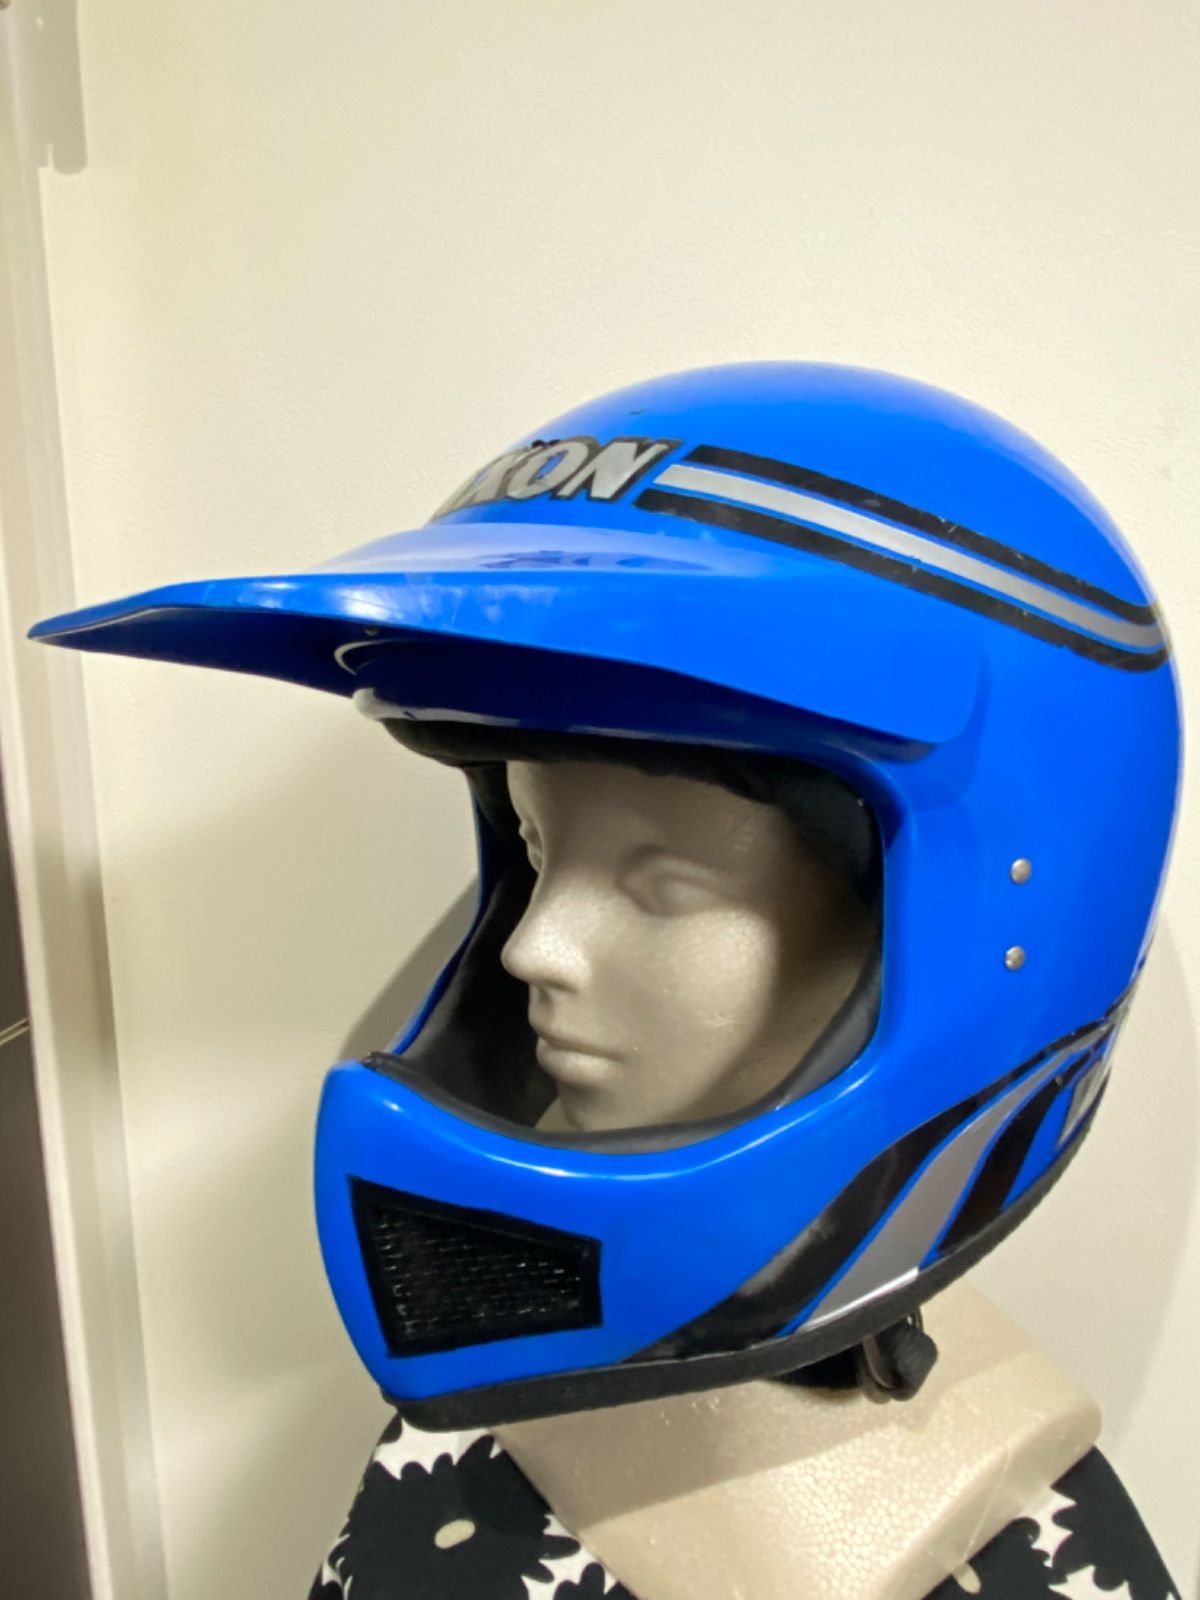 Maxon マクソン ビンテージヘルメット 日本未入荷 49.0%割引